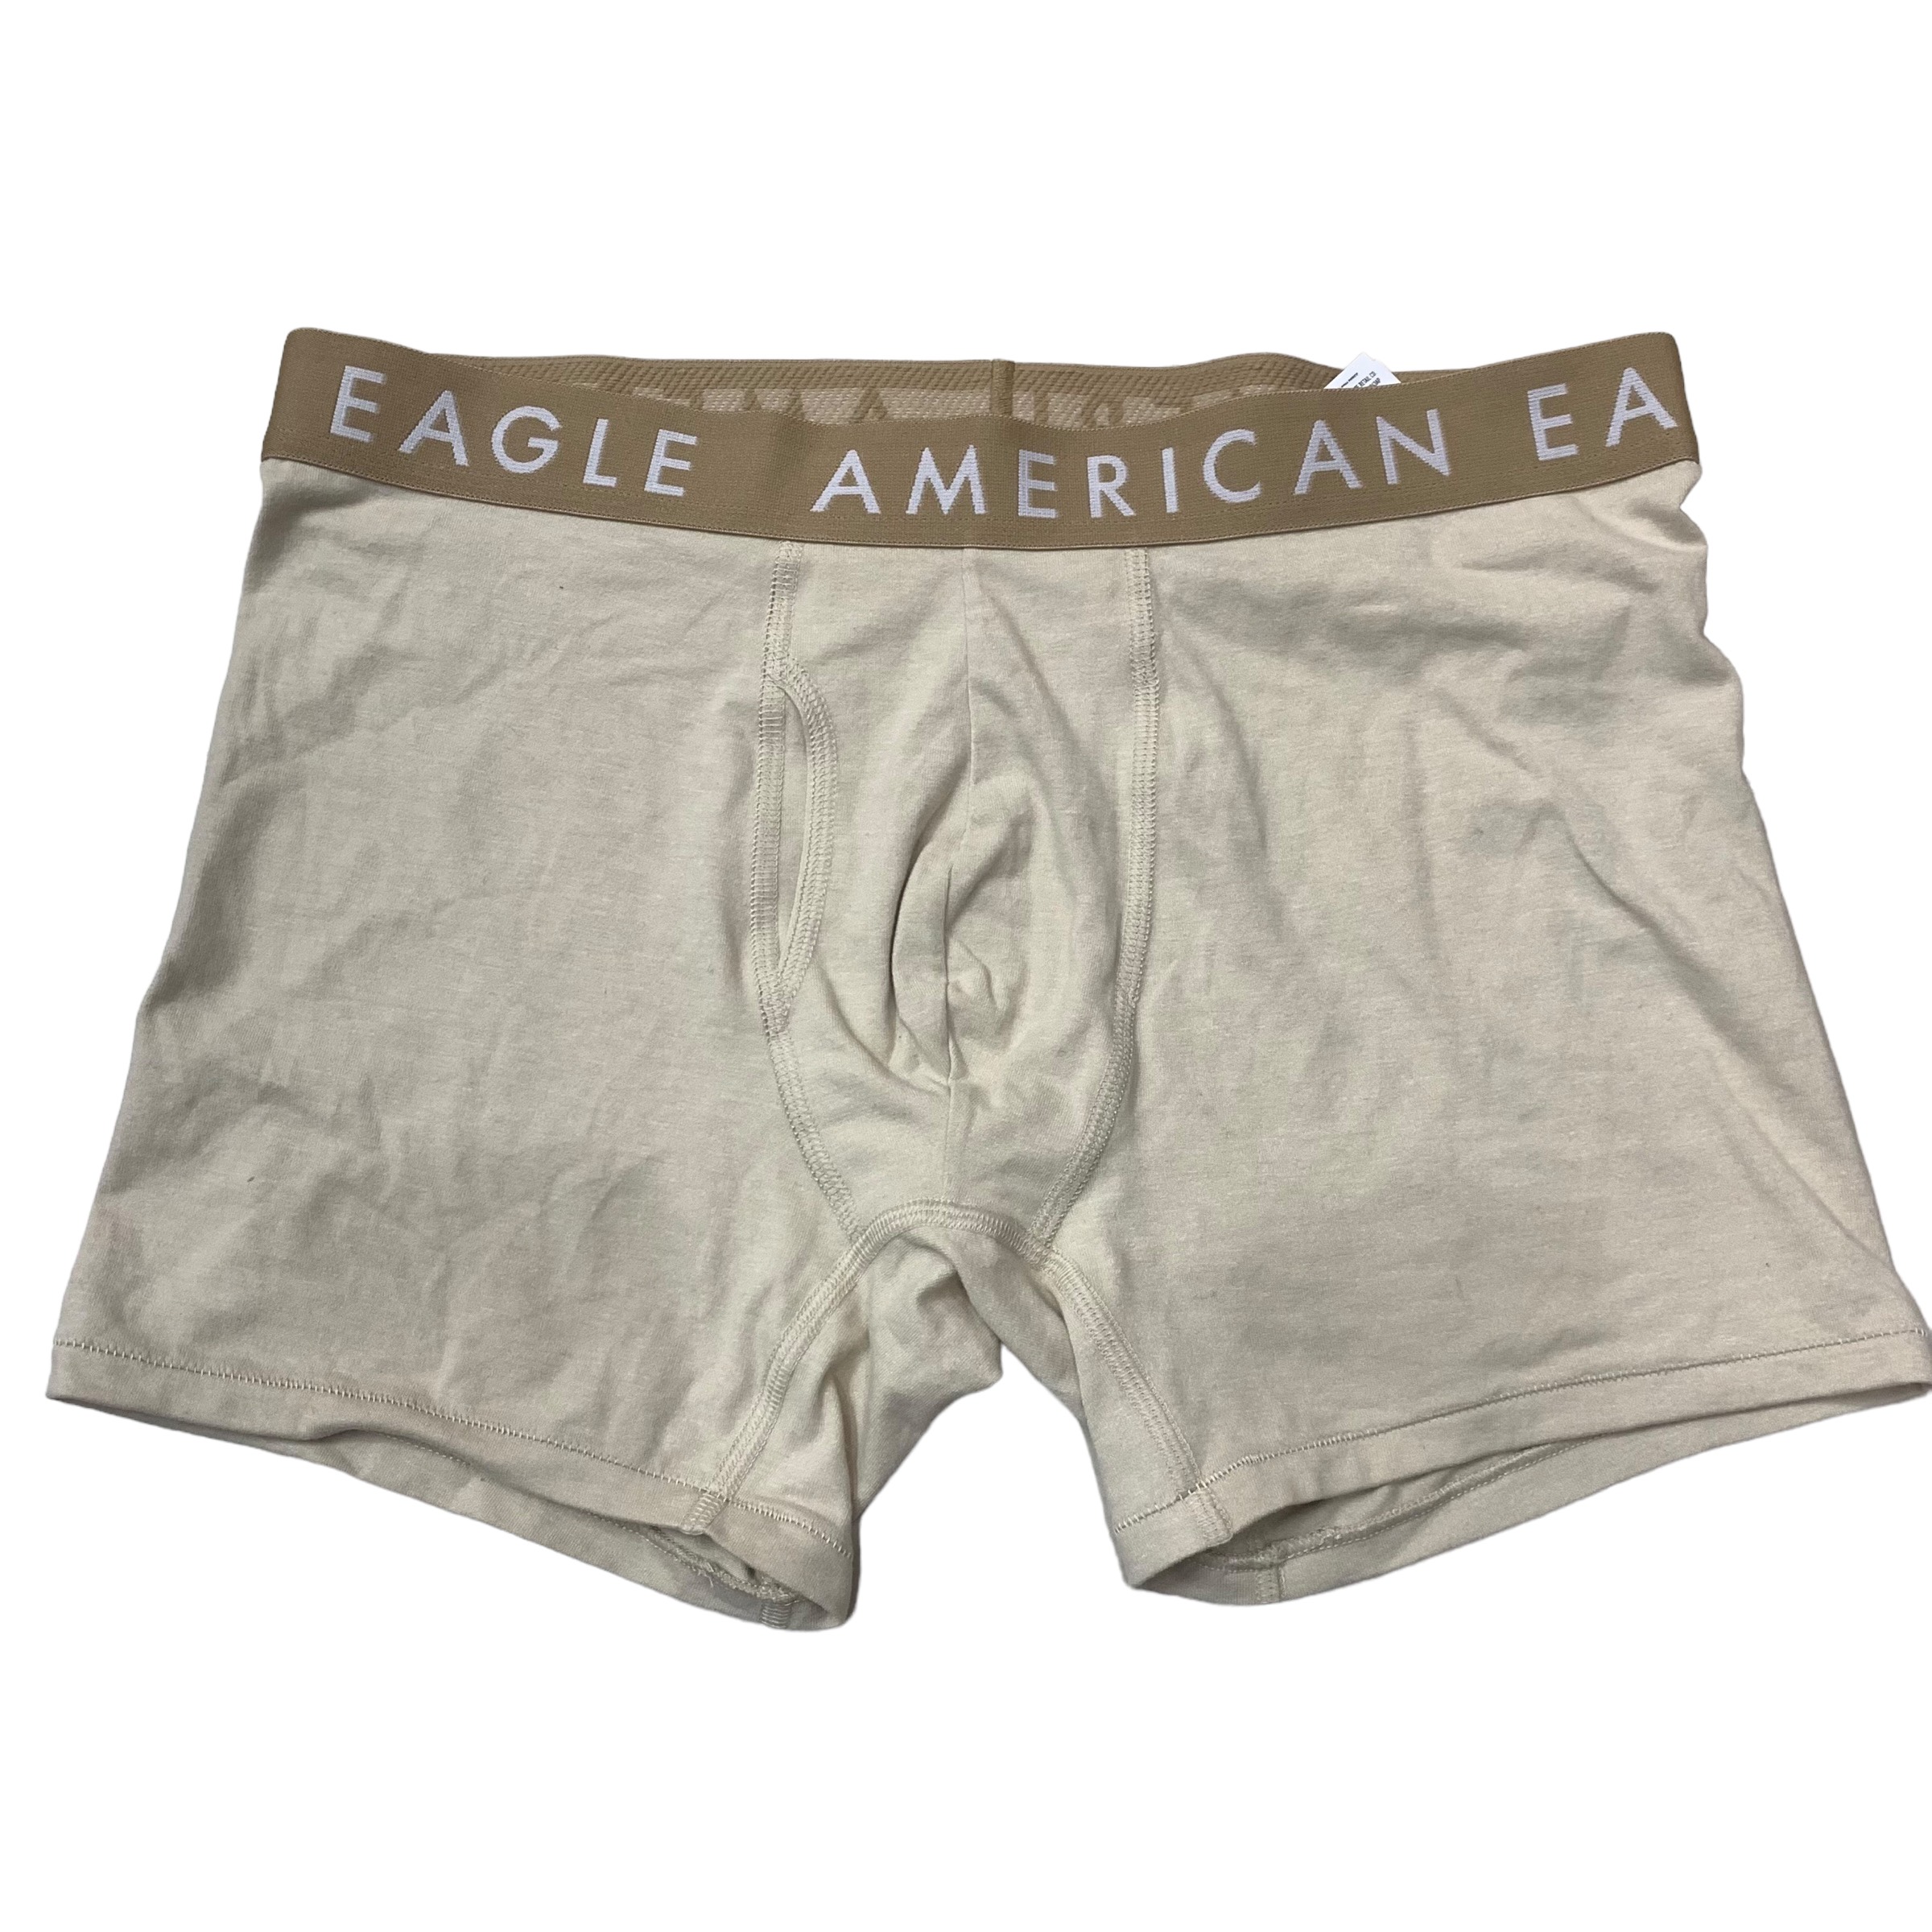 Quần Boxer American Eagle